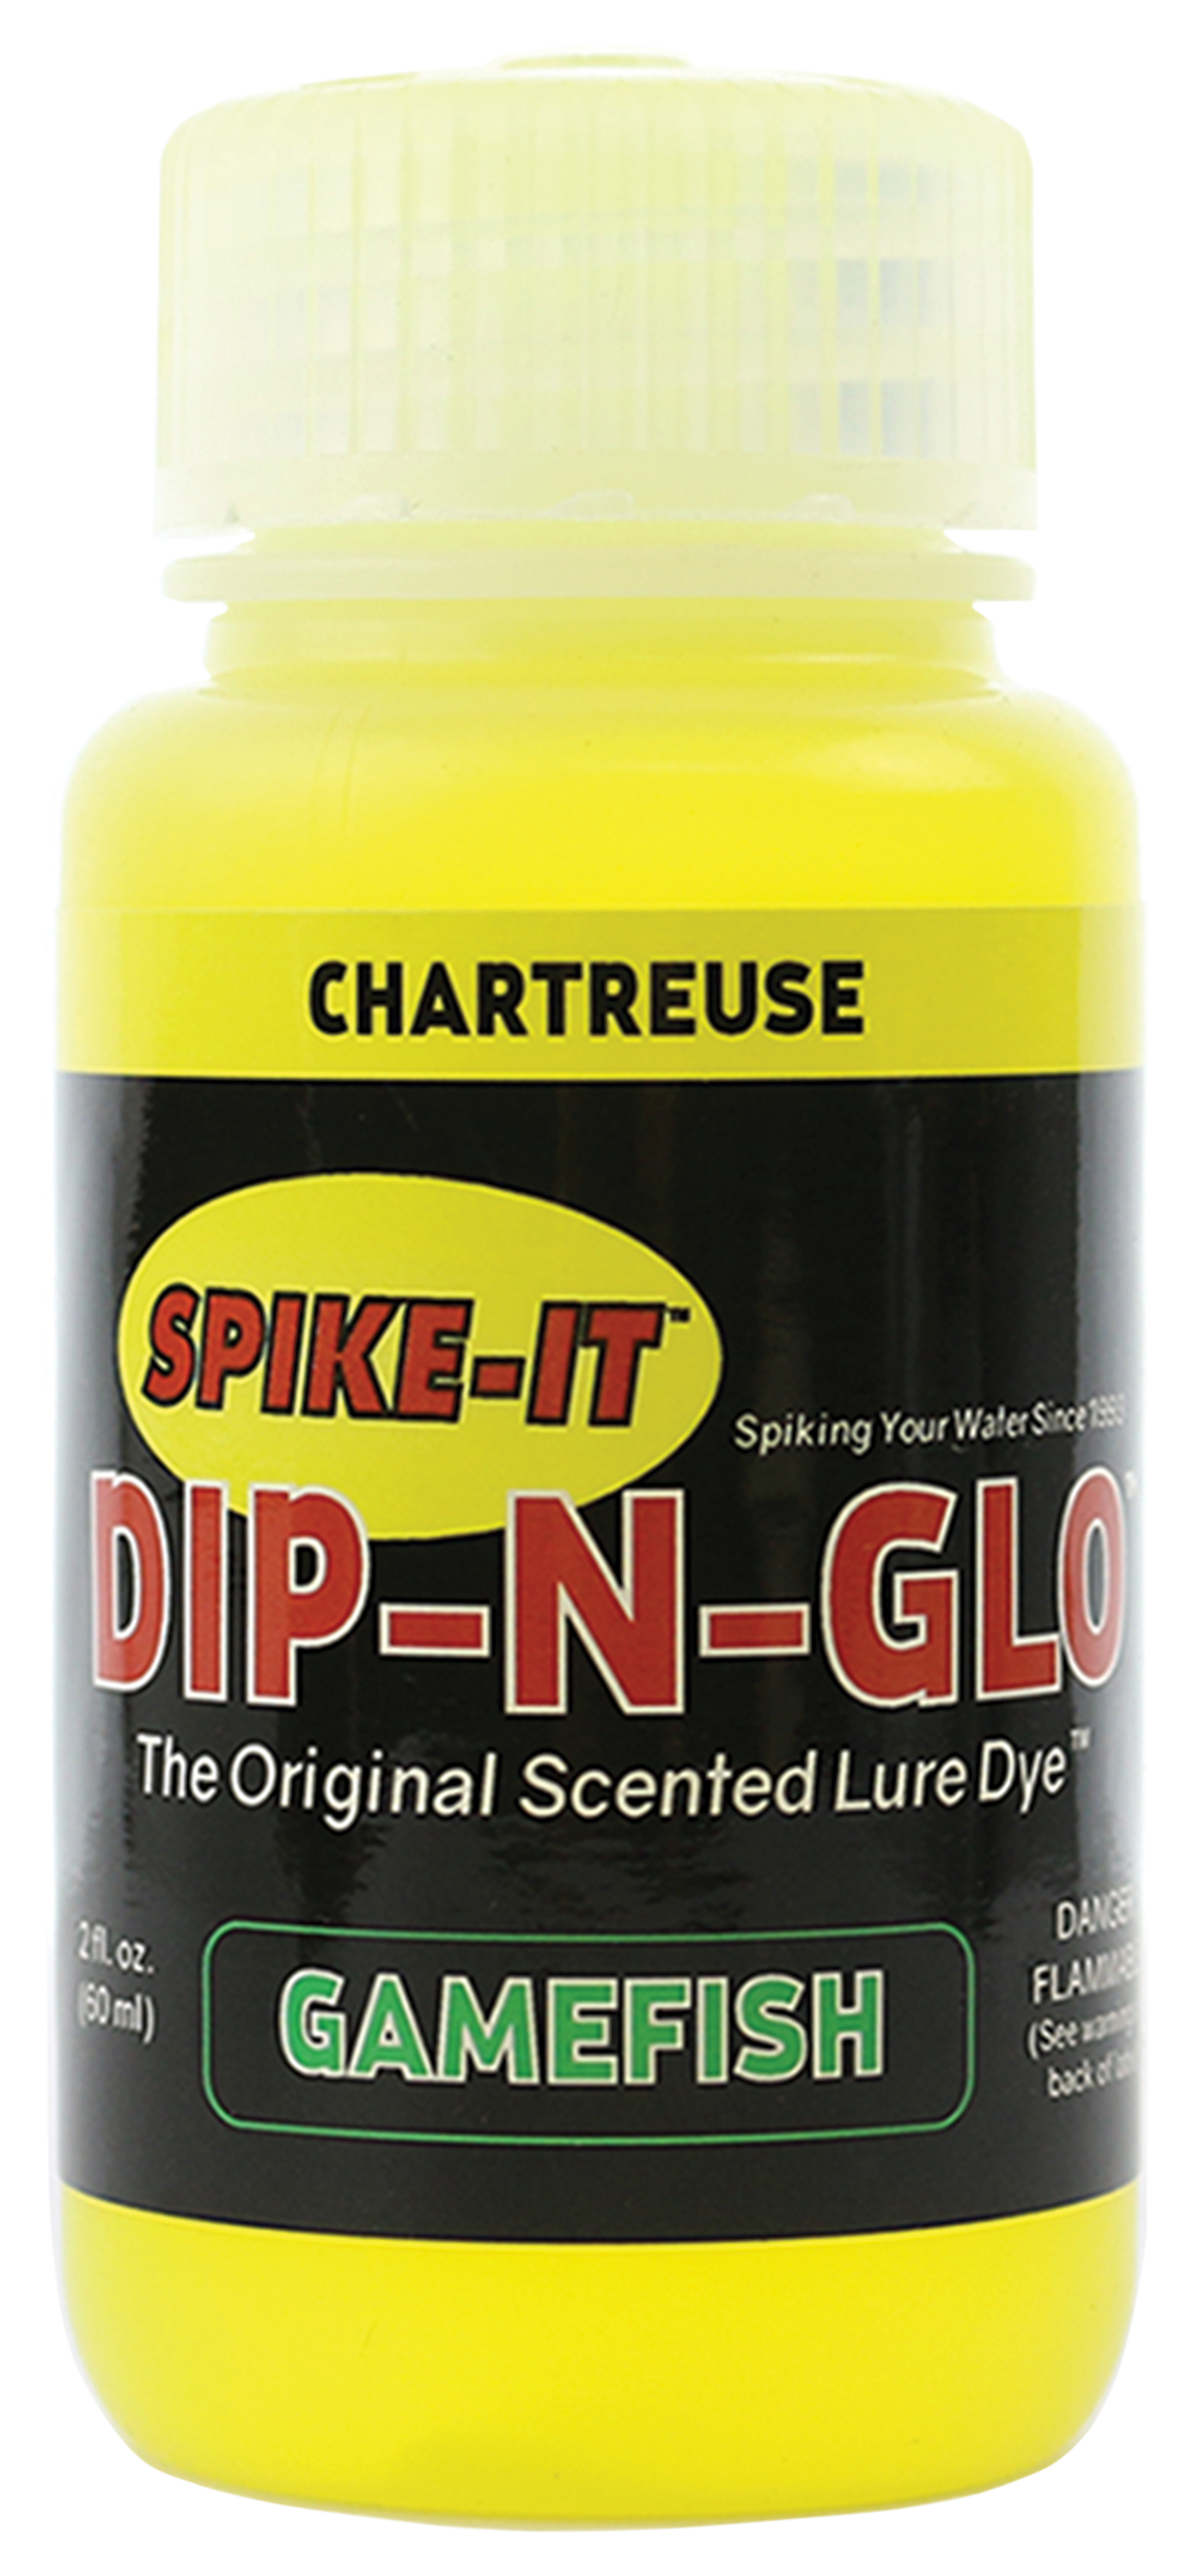 Spike-It Dip-N-Glo Soft Plastic Lure Dye Gamefish